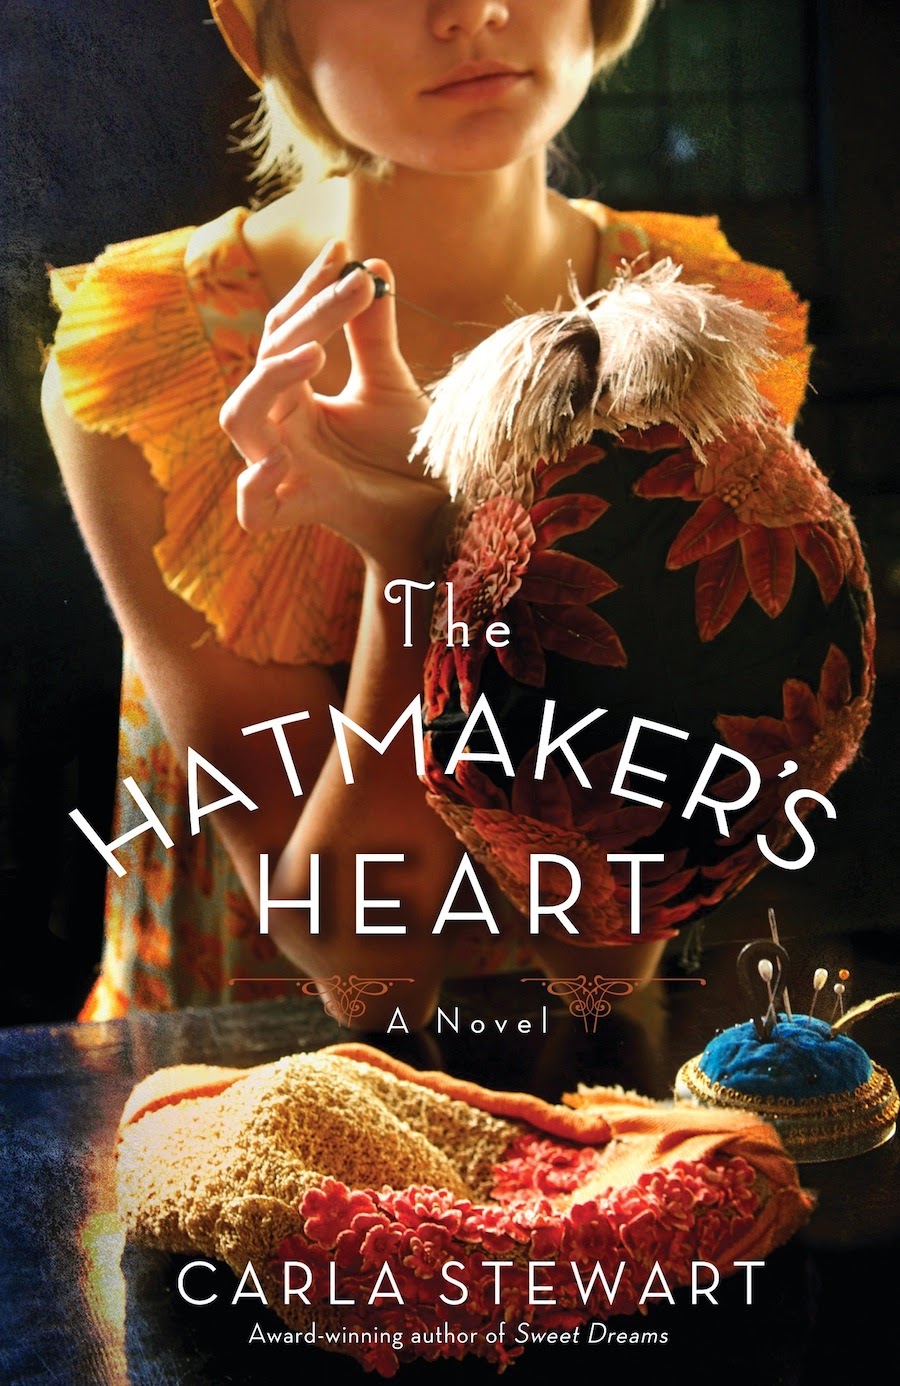 http://www.amazon.com/The-Hatmakers-Heart-A-Novel/dp/1455549940/ref=tmm_pap_title_0